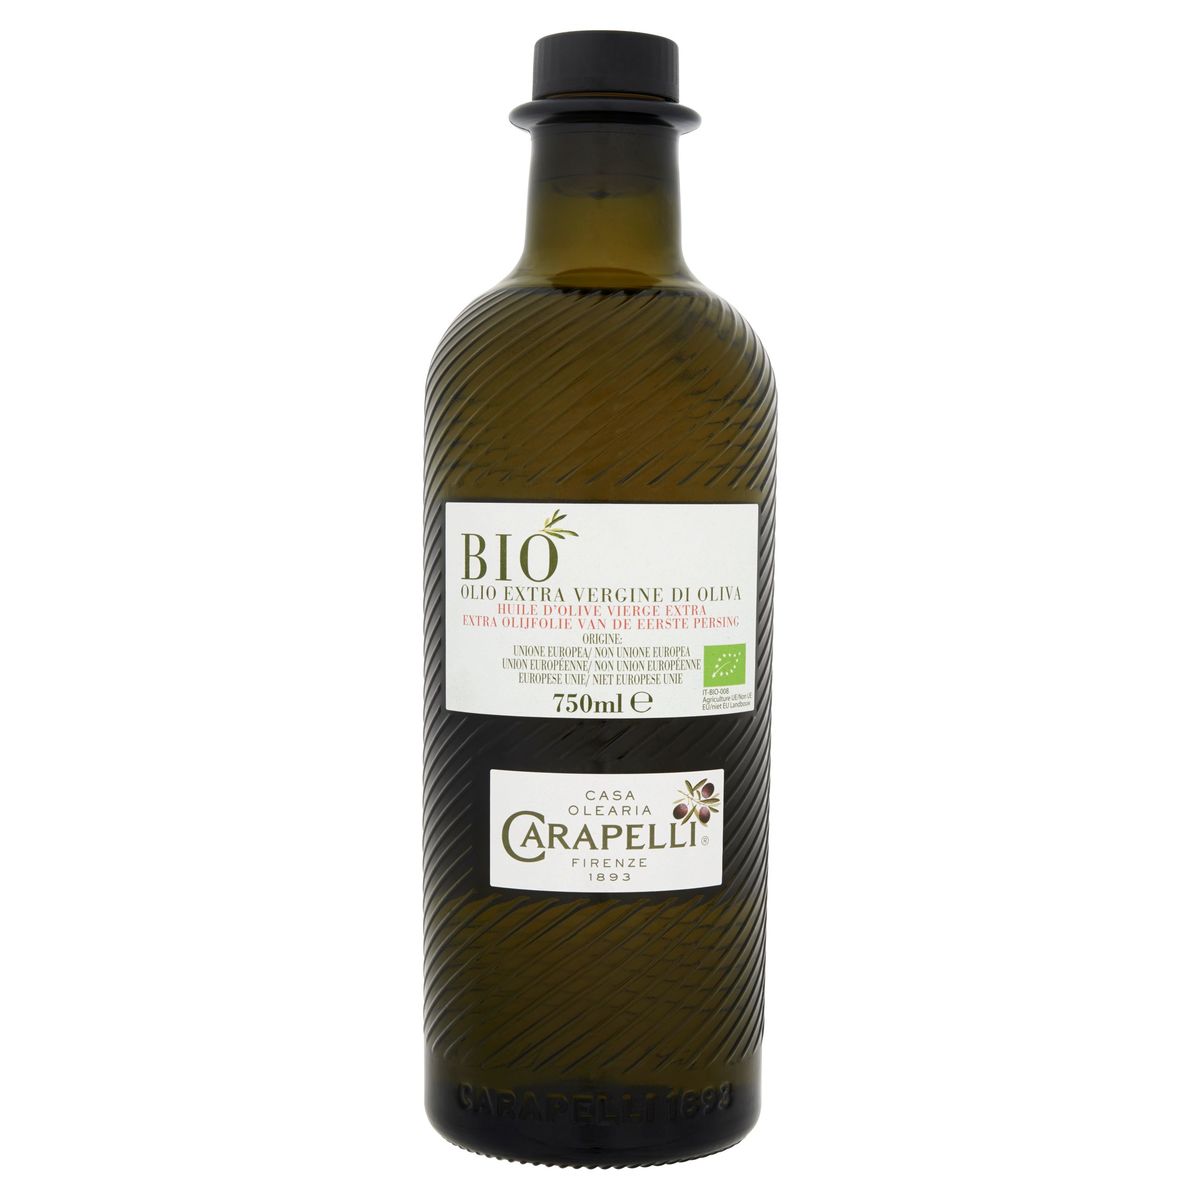 Carapelli Bio Huile d'Olive Vierge Extra 750 ml